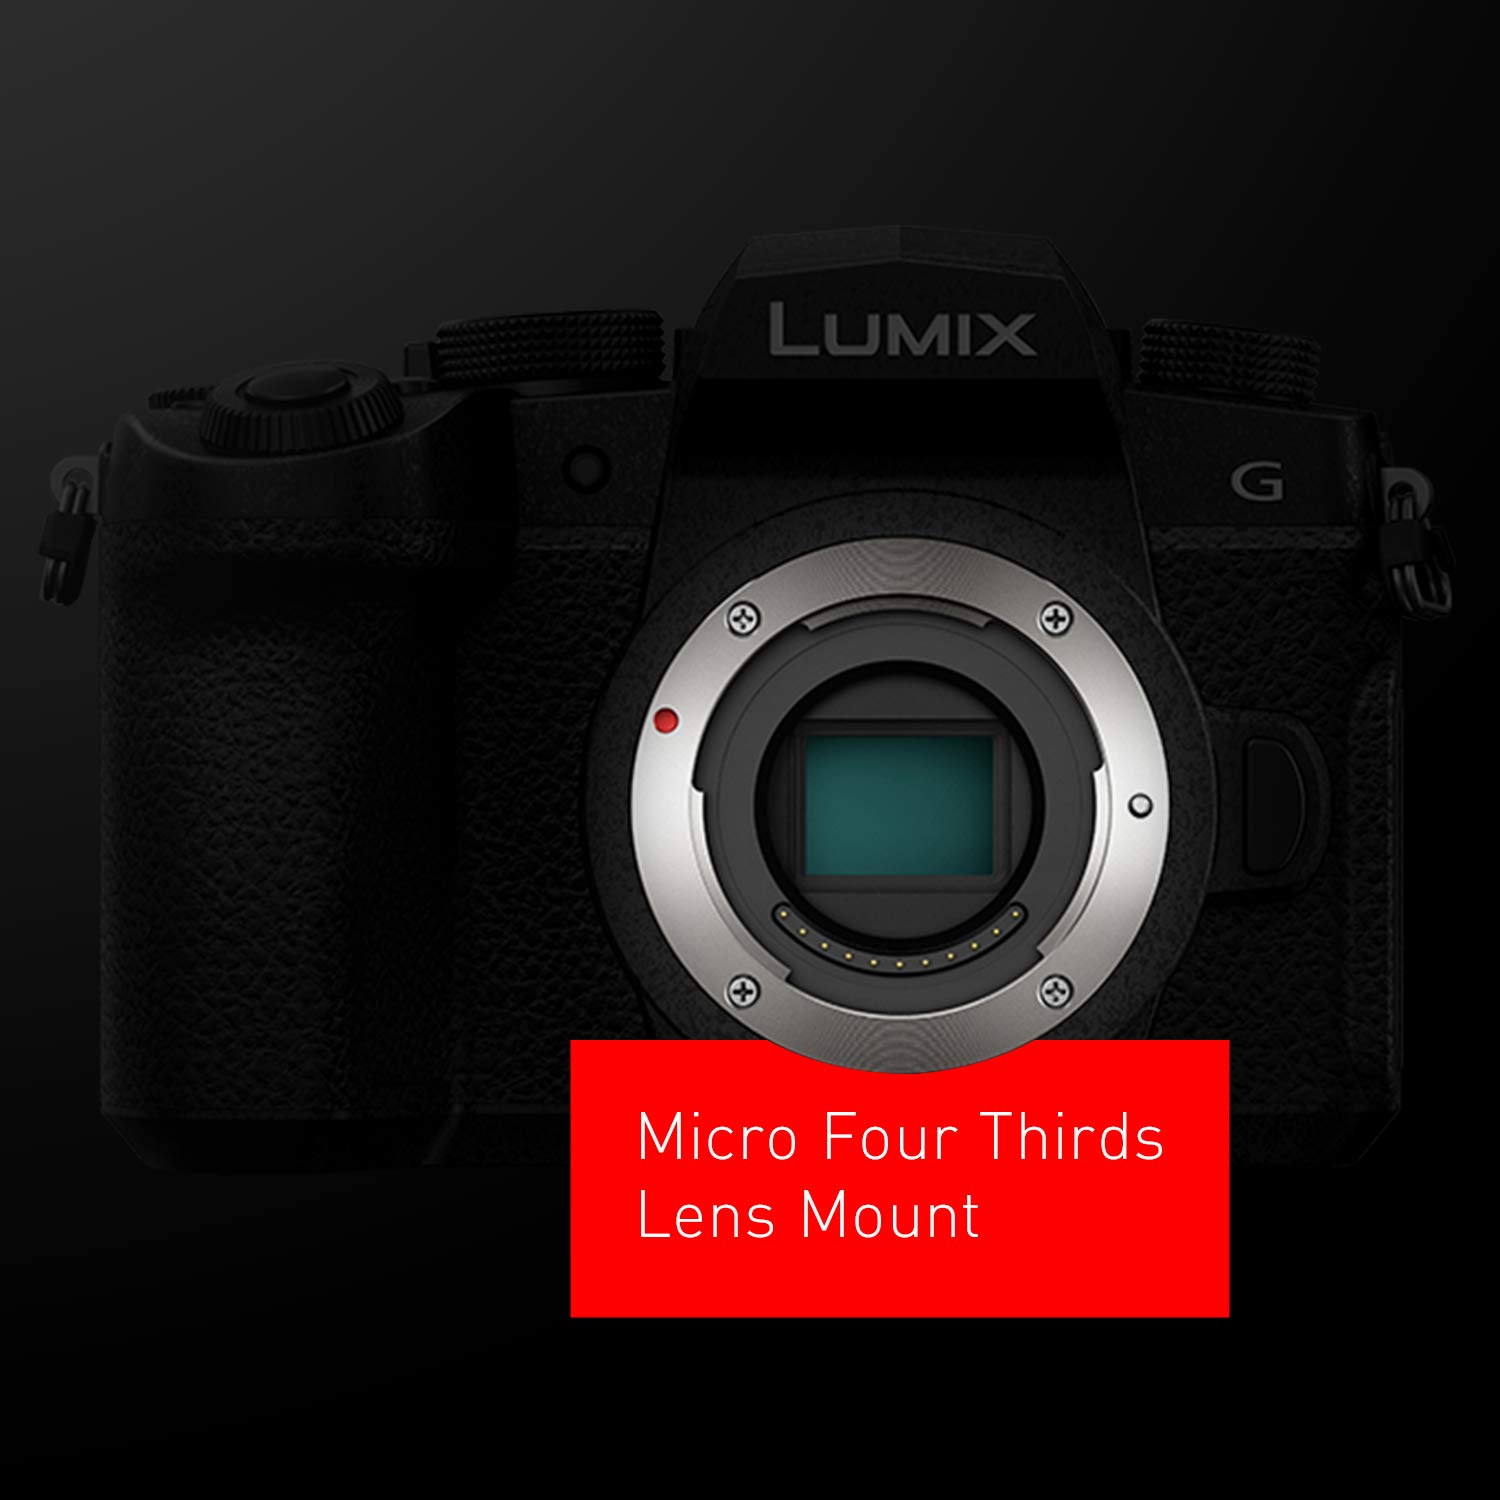 Panasonic LUMIX G95 20.3 Megapixel Mirrorless Camera, 12-60mm F3.5-5.6 Micro Four Thirds Lens, 5-Axis Dual I.S. 2, 4K 24p 30p Video, Pre-Installed V-Log L, 3” LCD Touchscreen - DC-G95MK (Black)